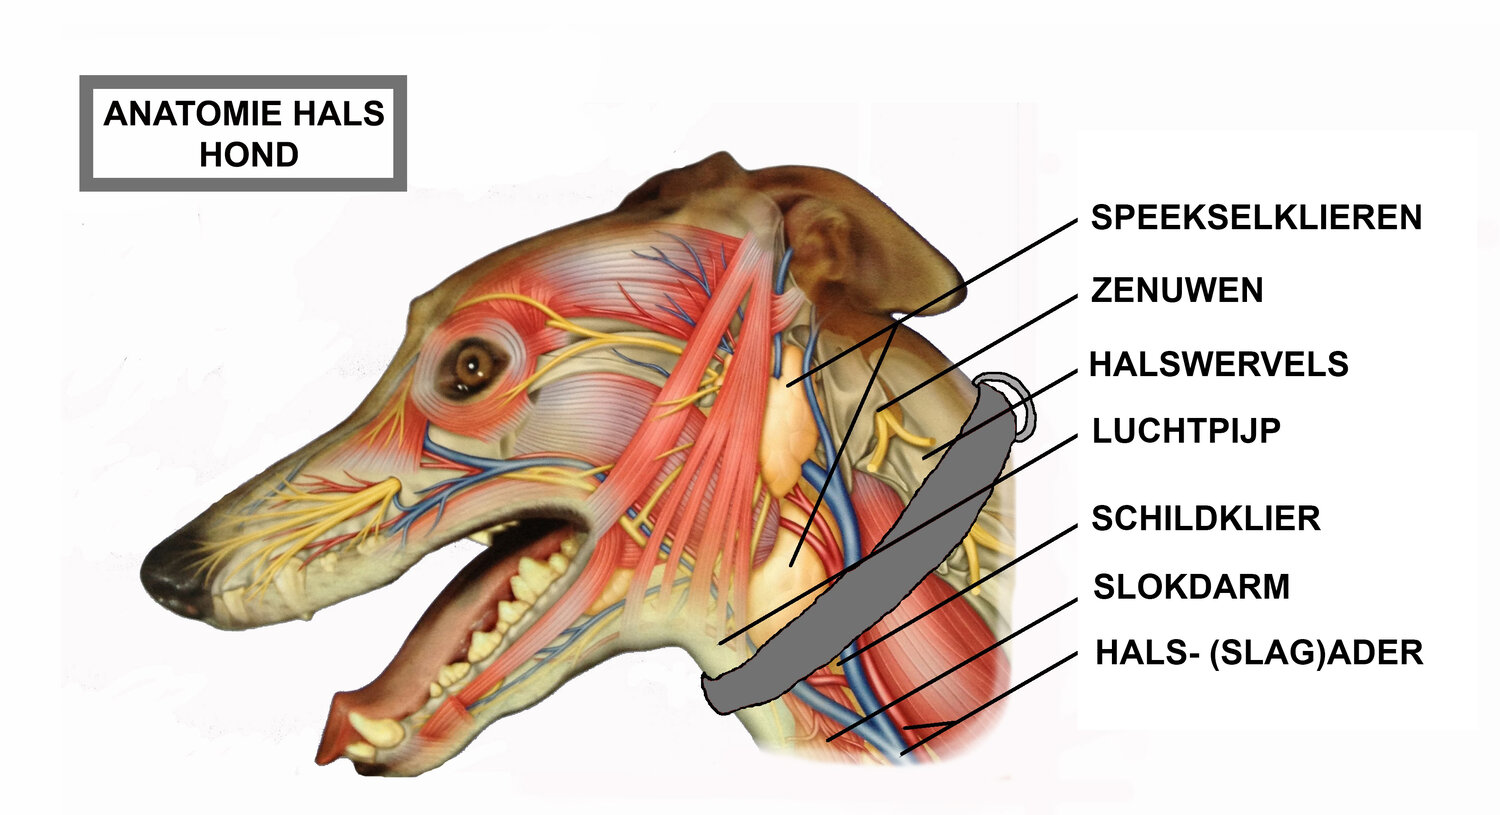 Anatomie-nek-hond02.jpg